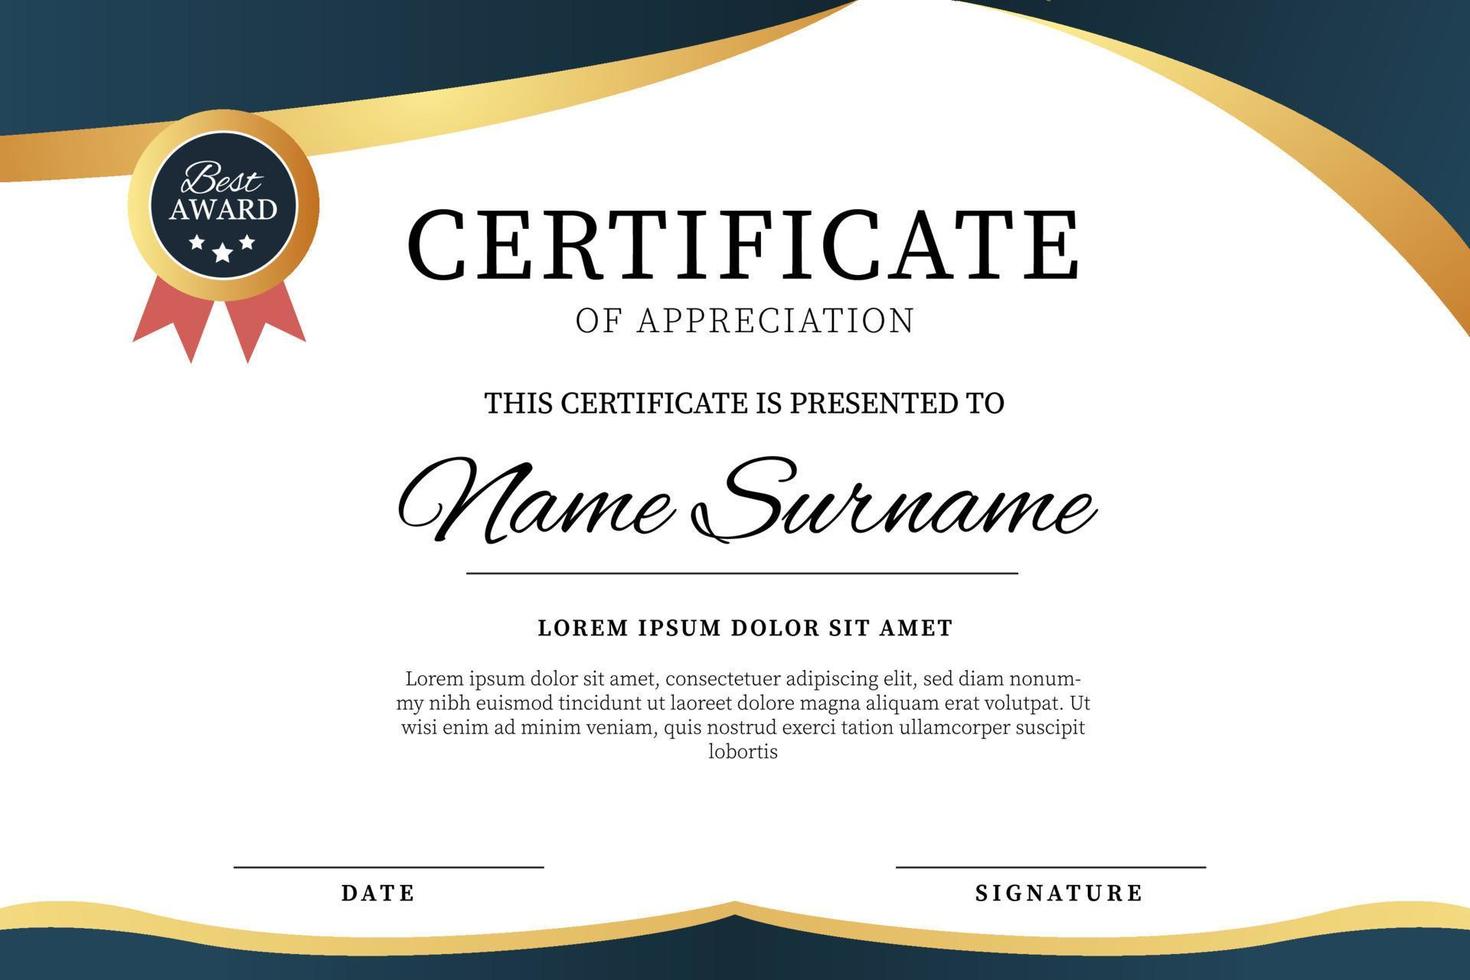 Creative Certificate of Achievement Award Template vector